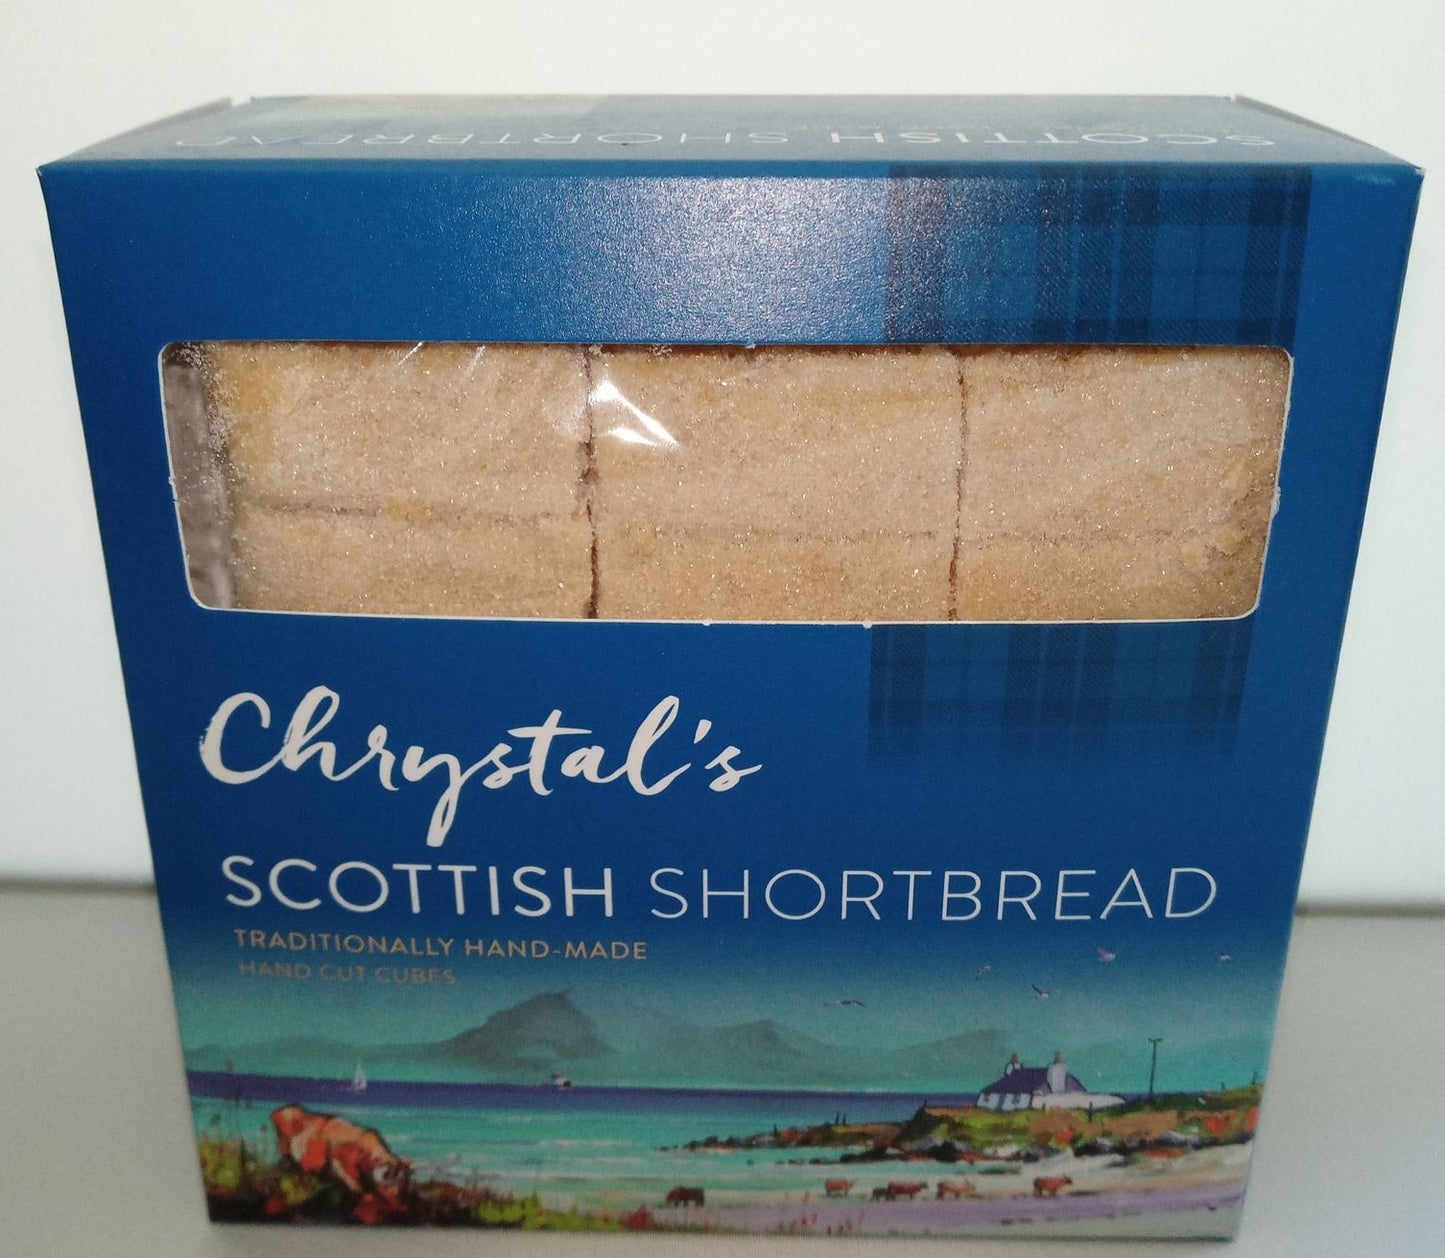 Chrystal's Scottish shortbread